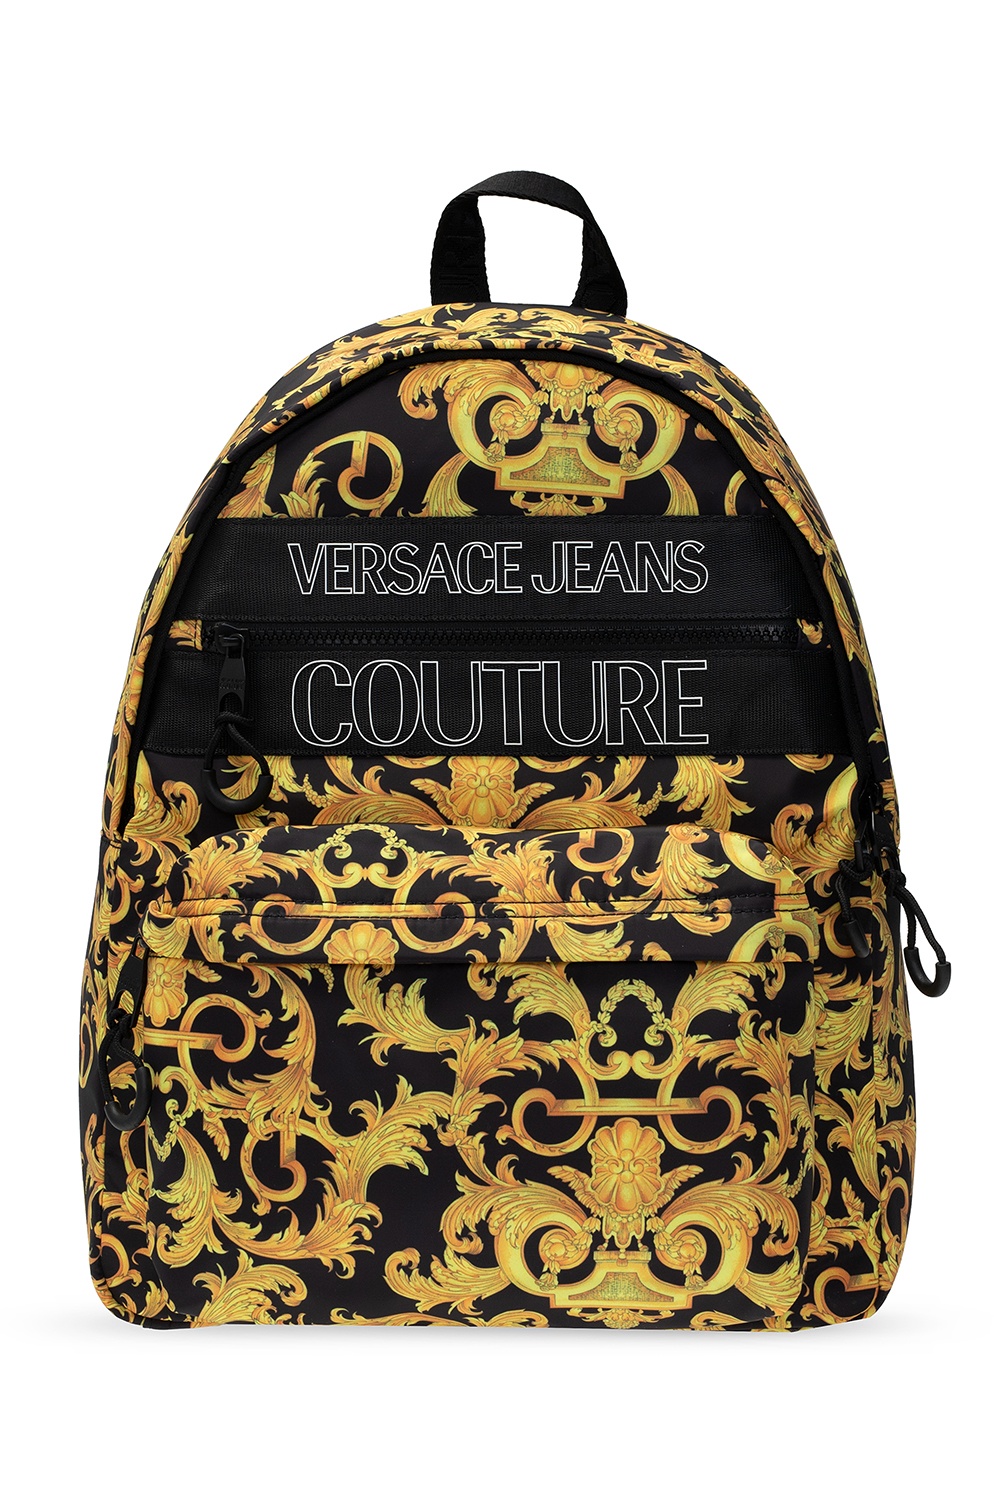 Versace Jeans Couture - Vitkac Australia